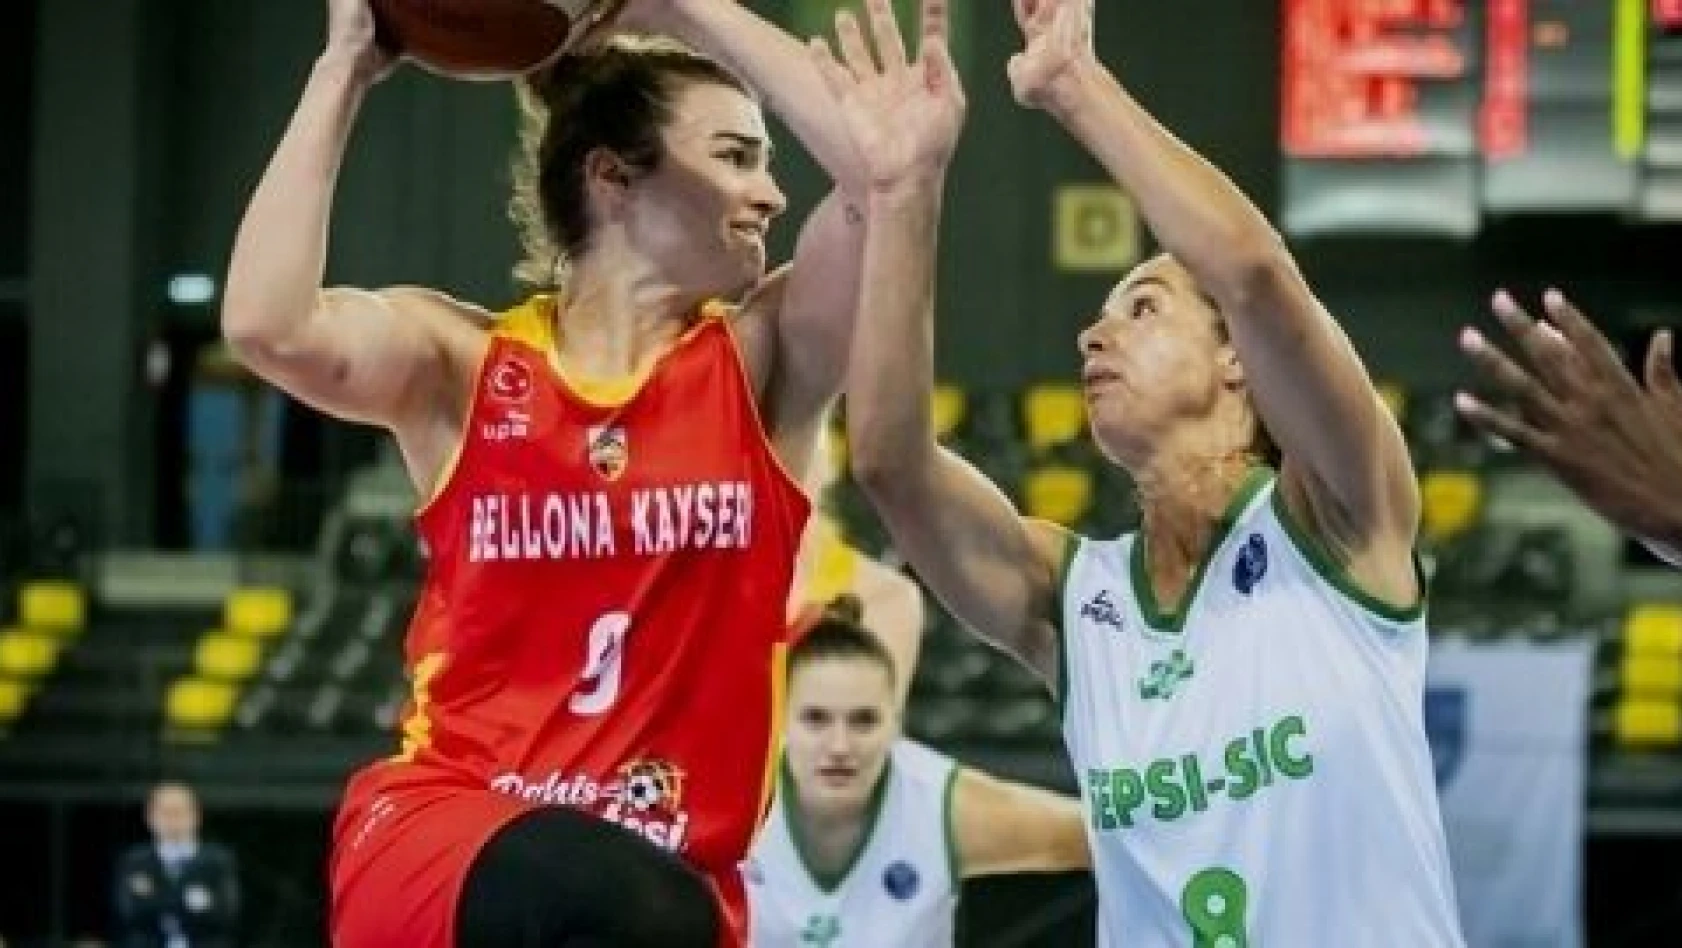 Bellona Kayseri Basketbol elendi